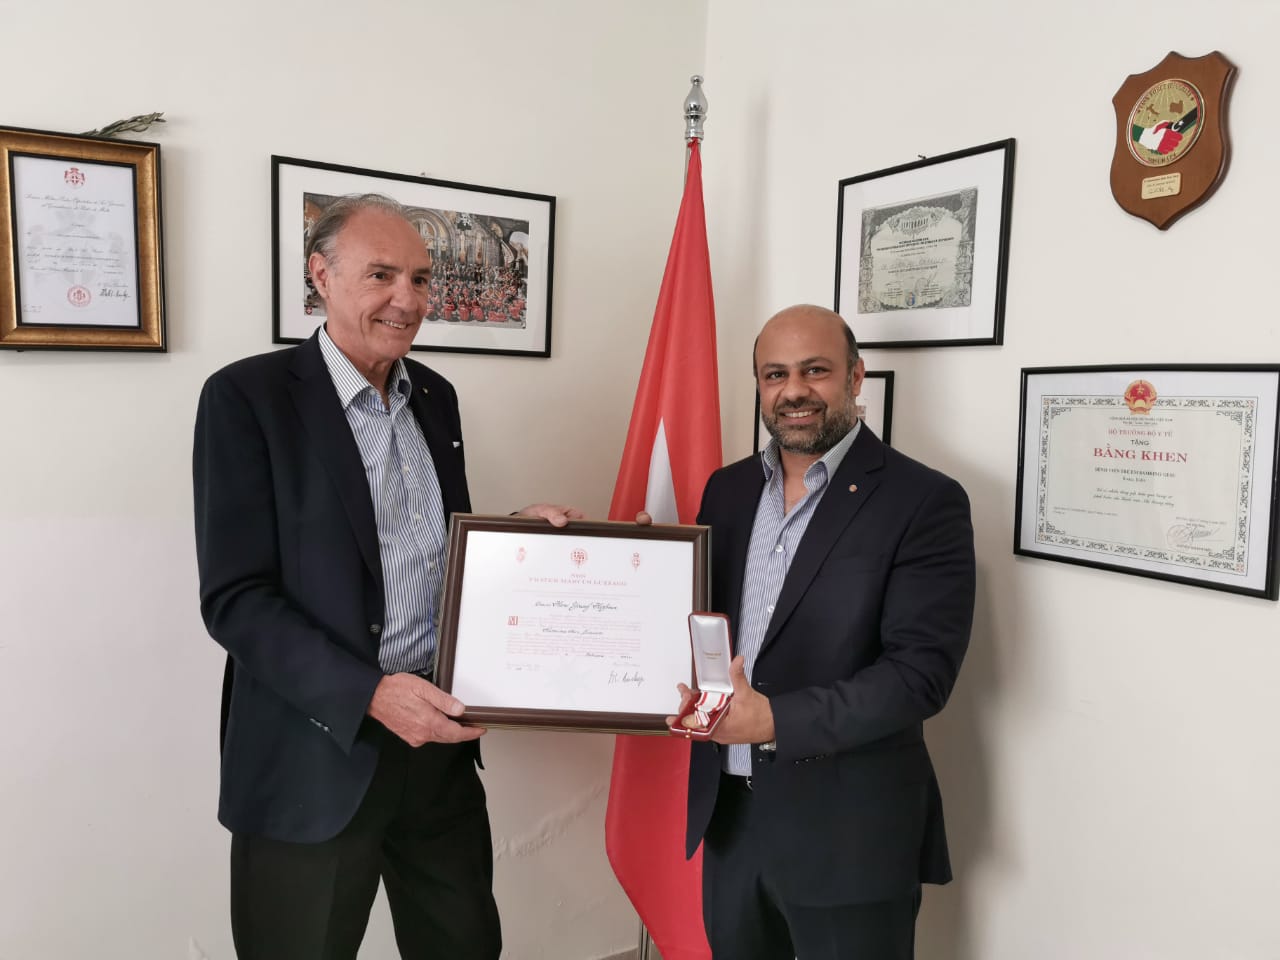 Ambassador grants decoration pro Merito Melitensi